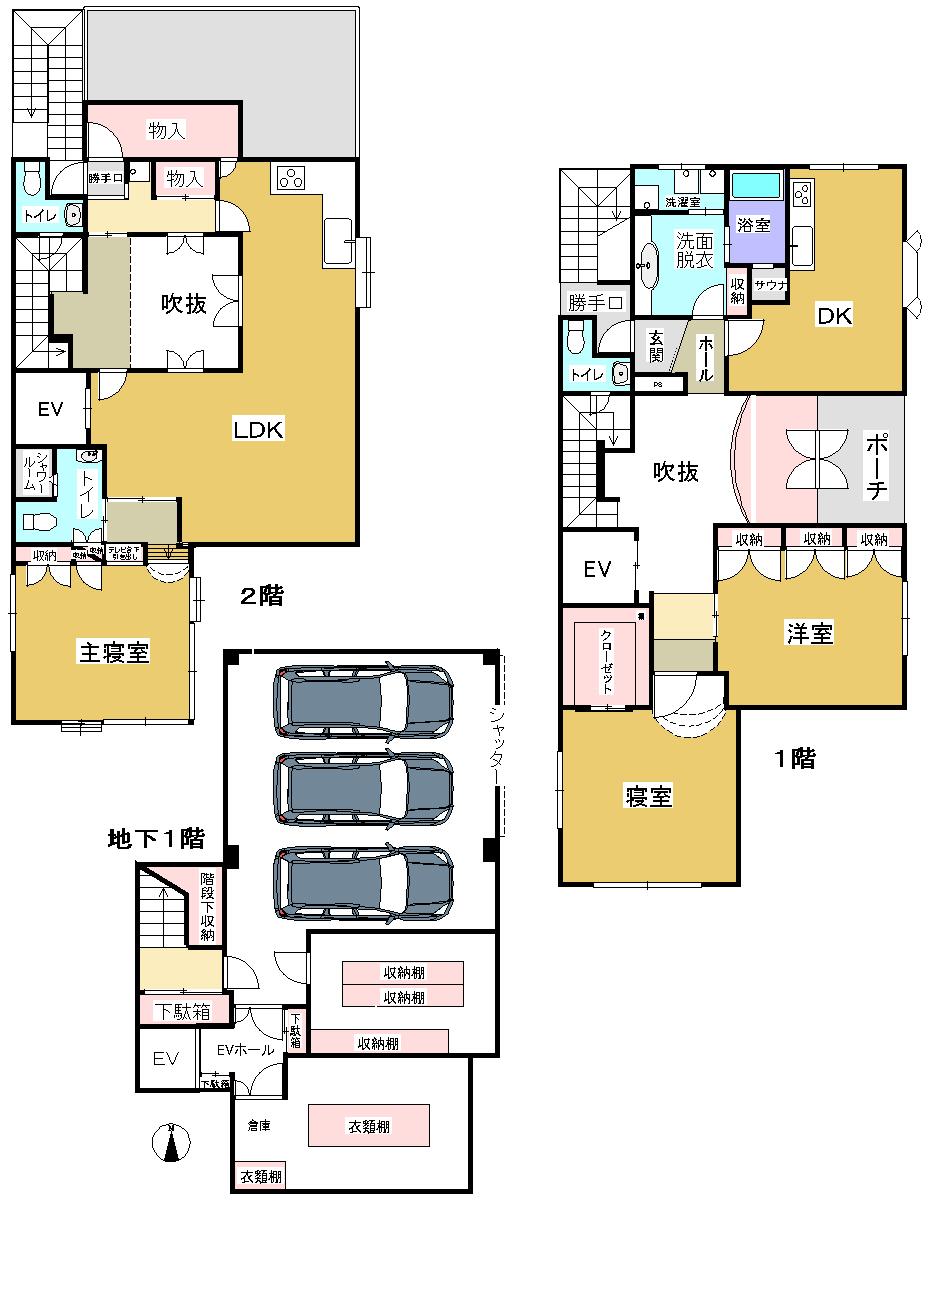 Floor plan. 87,800,000 yen, 3LDDKK + 2S (storeroom), Land area 757.02 sq m , Building area 373.22 sq m